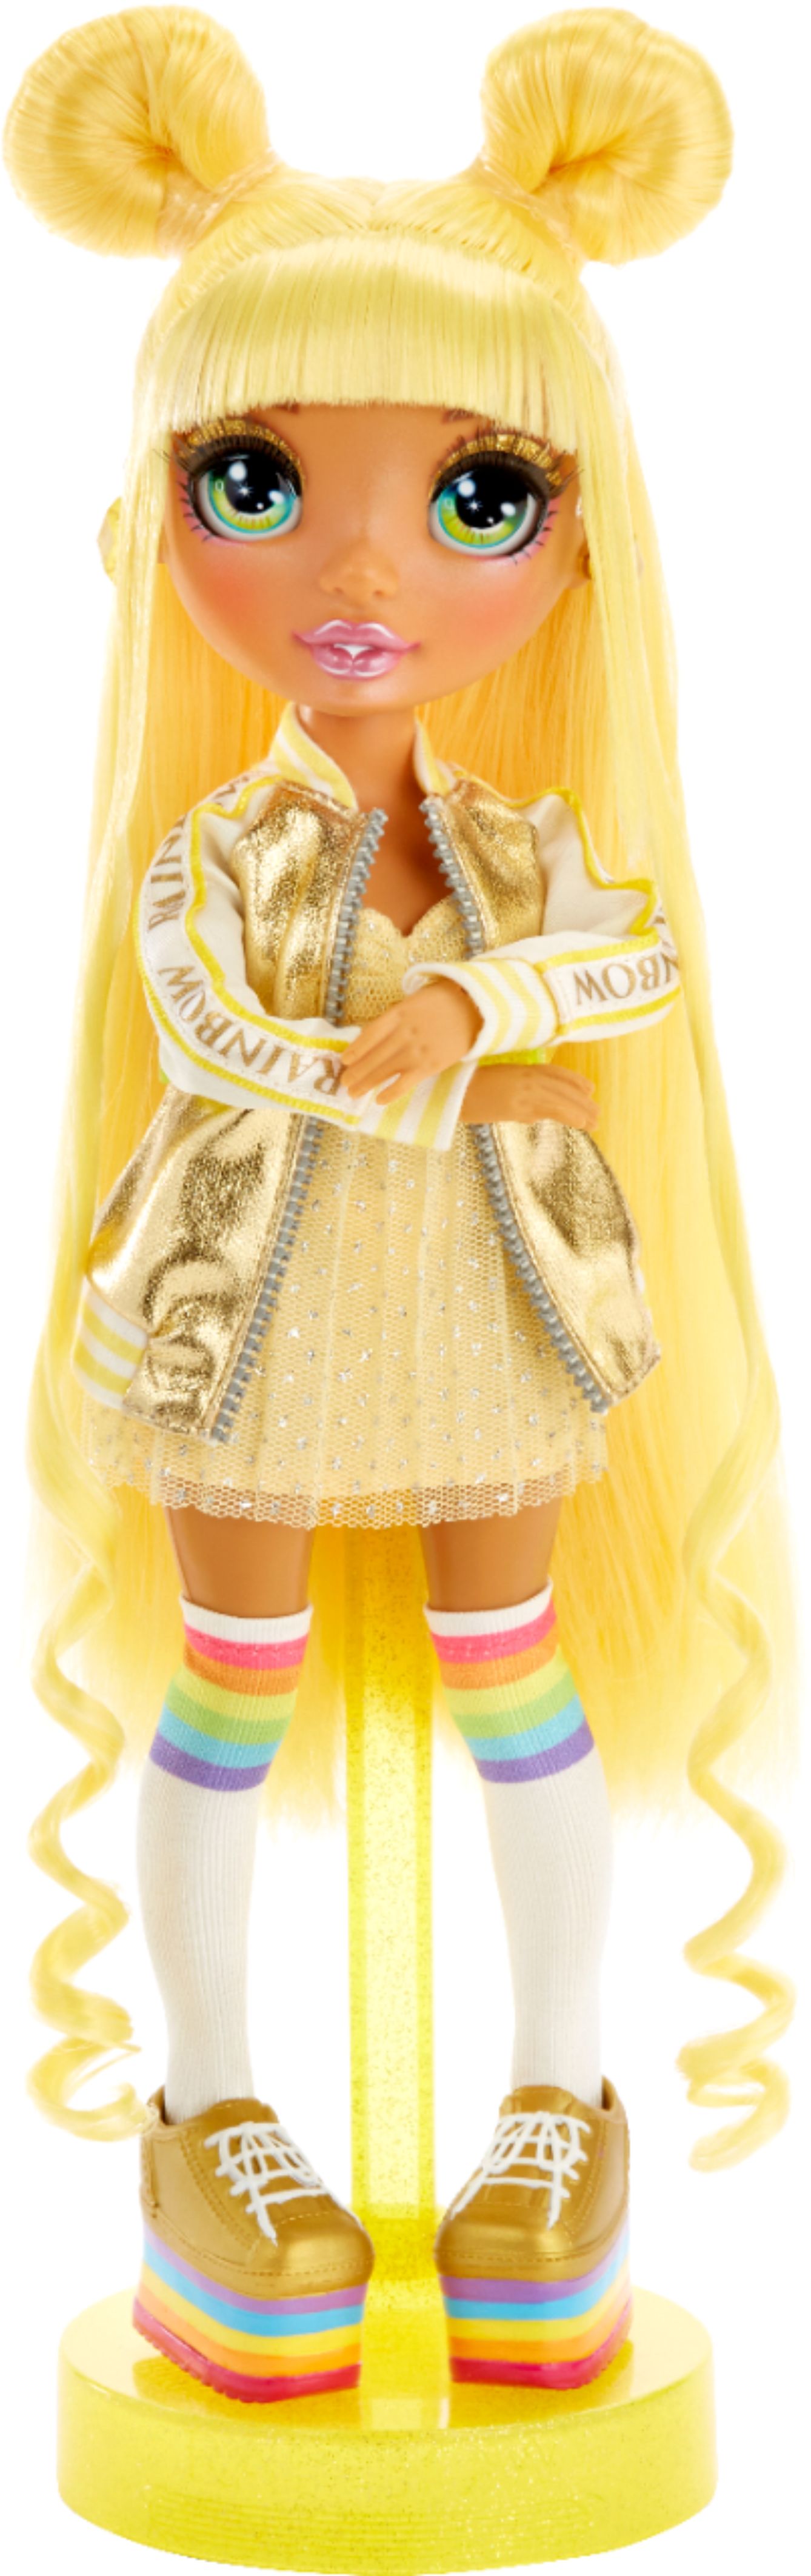 Rainbow High Fashion Doll- Sunny Madison 569626 - Best Buy